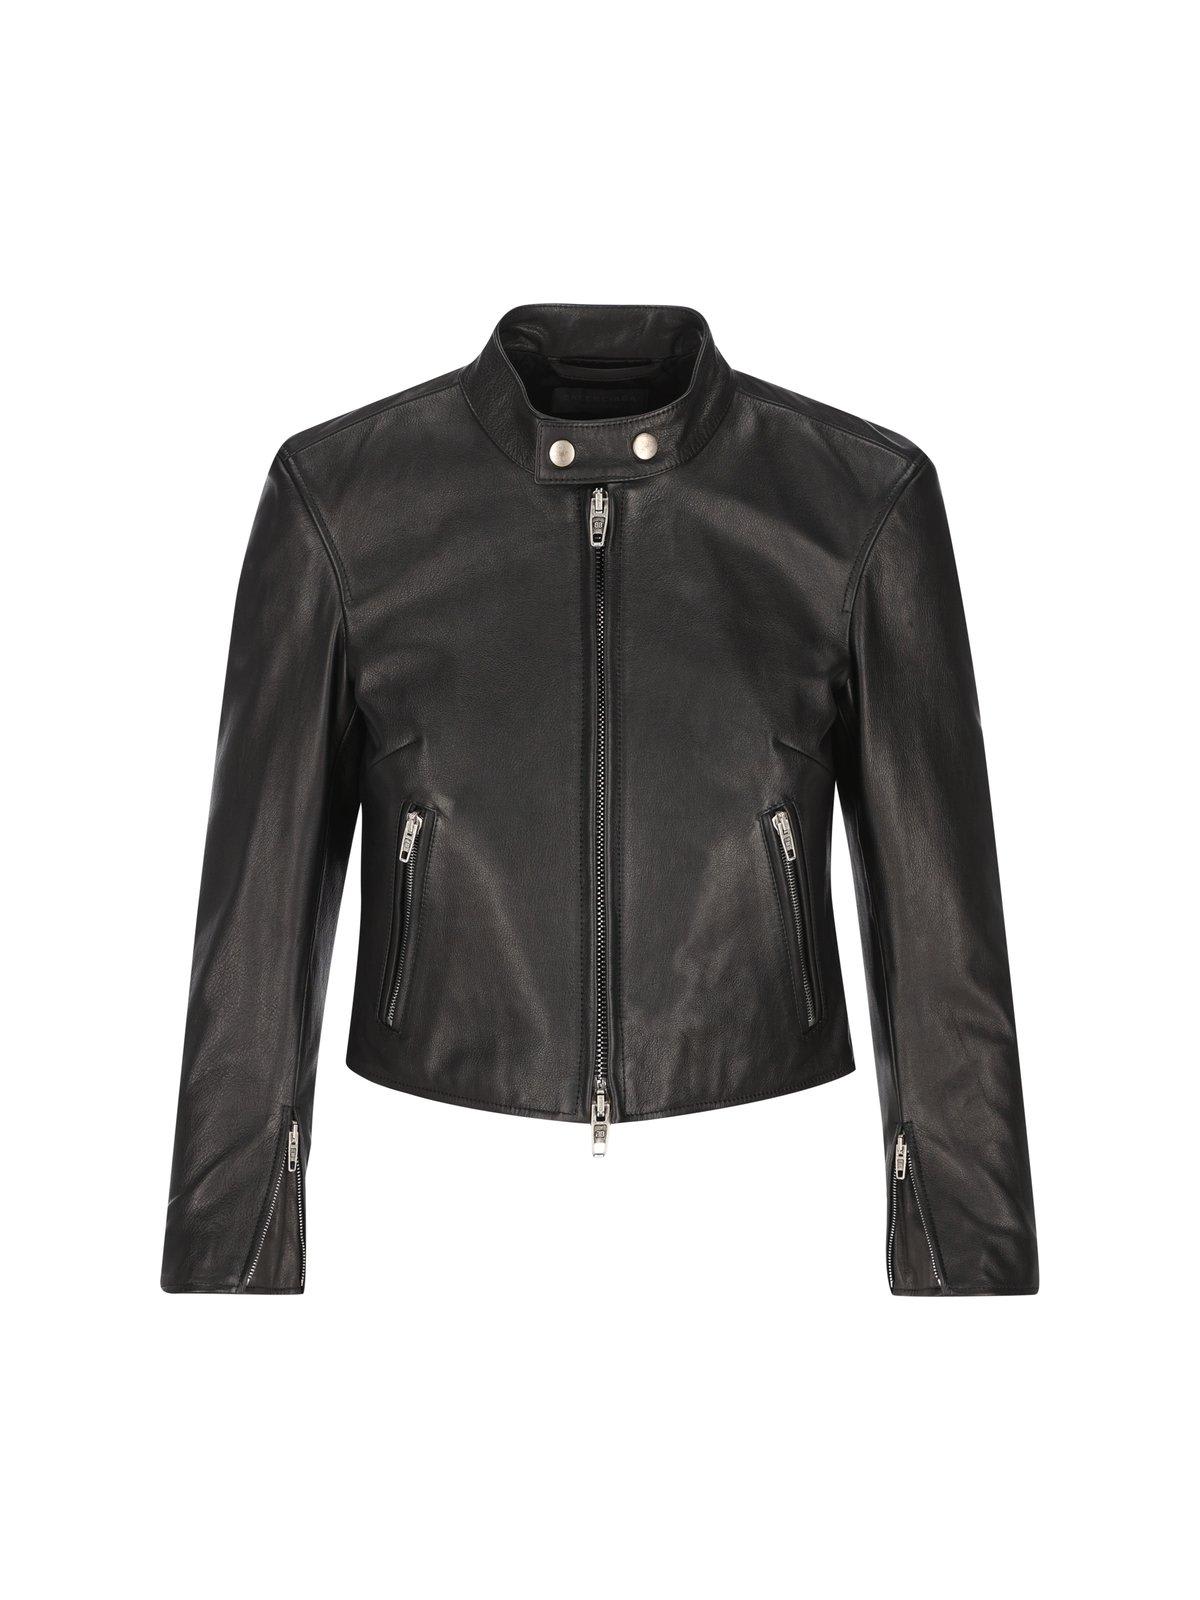 Balenciaga Racer Leather Jacket In Black